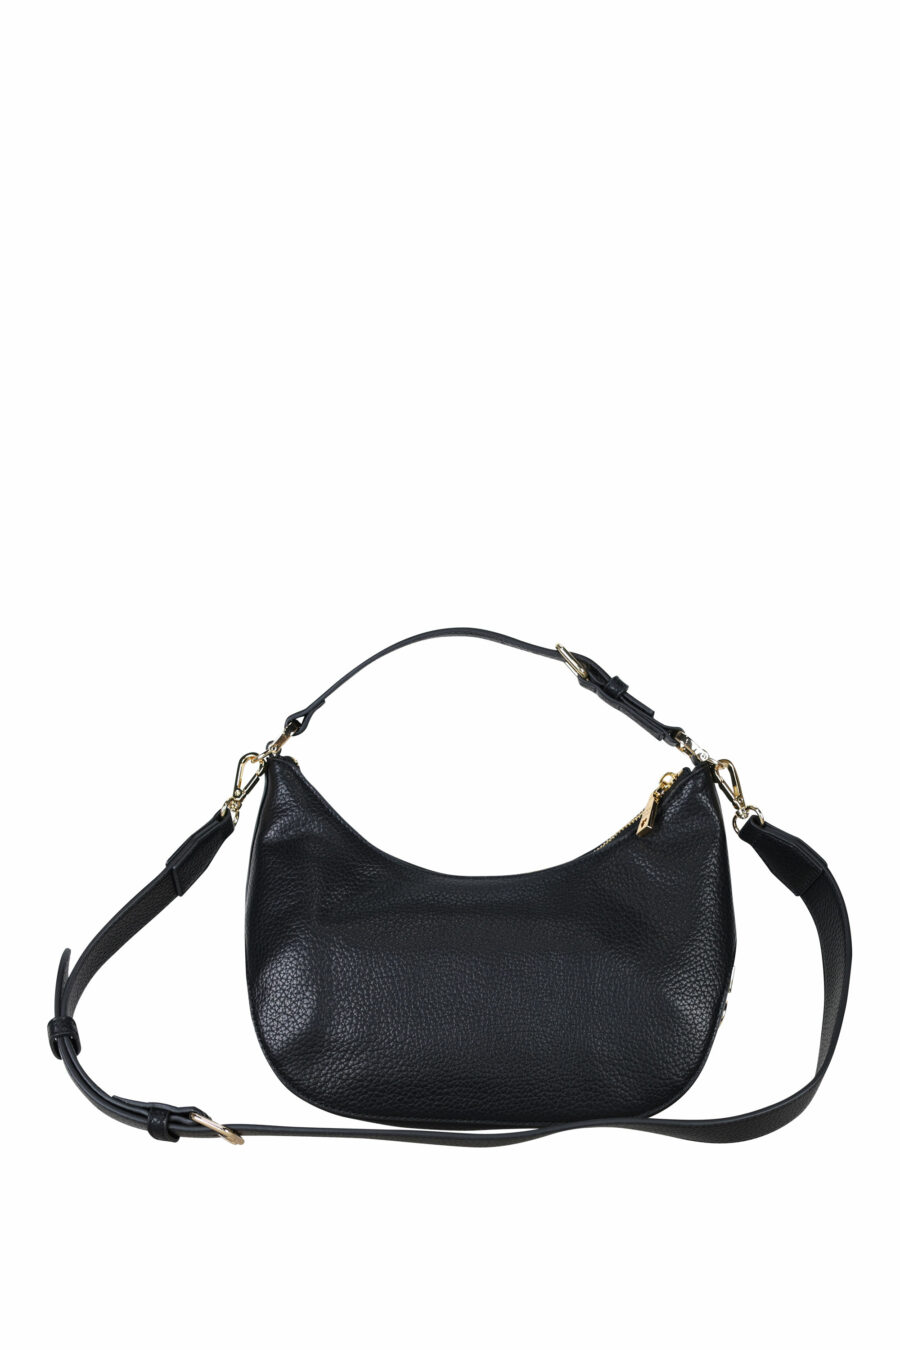 Black leather shoulder bag with monochrome mini logo - 8050142974310 1